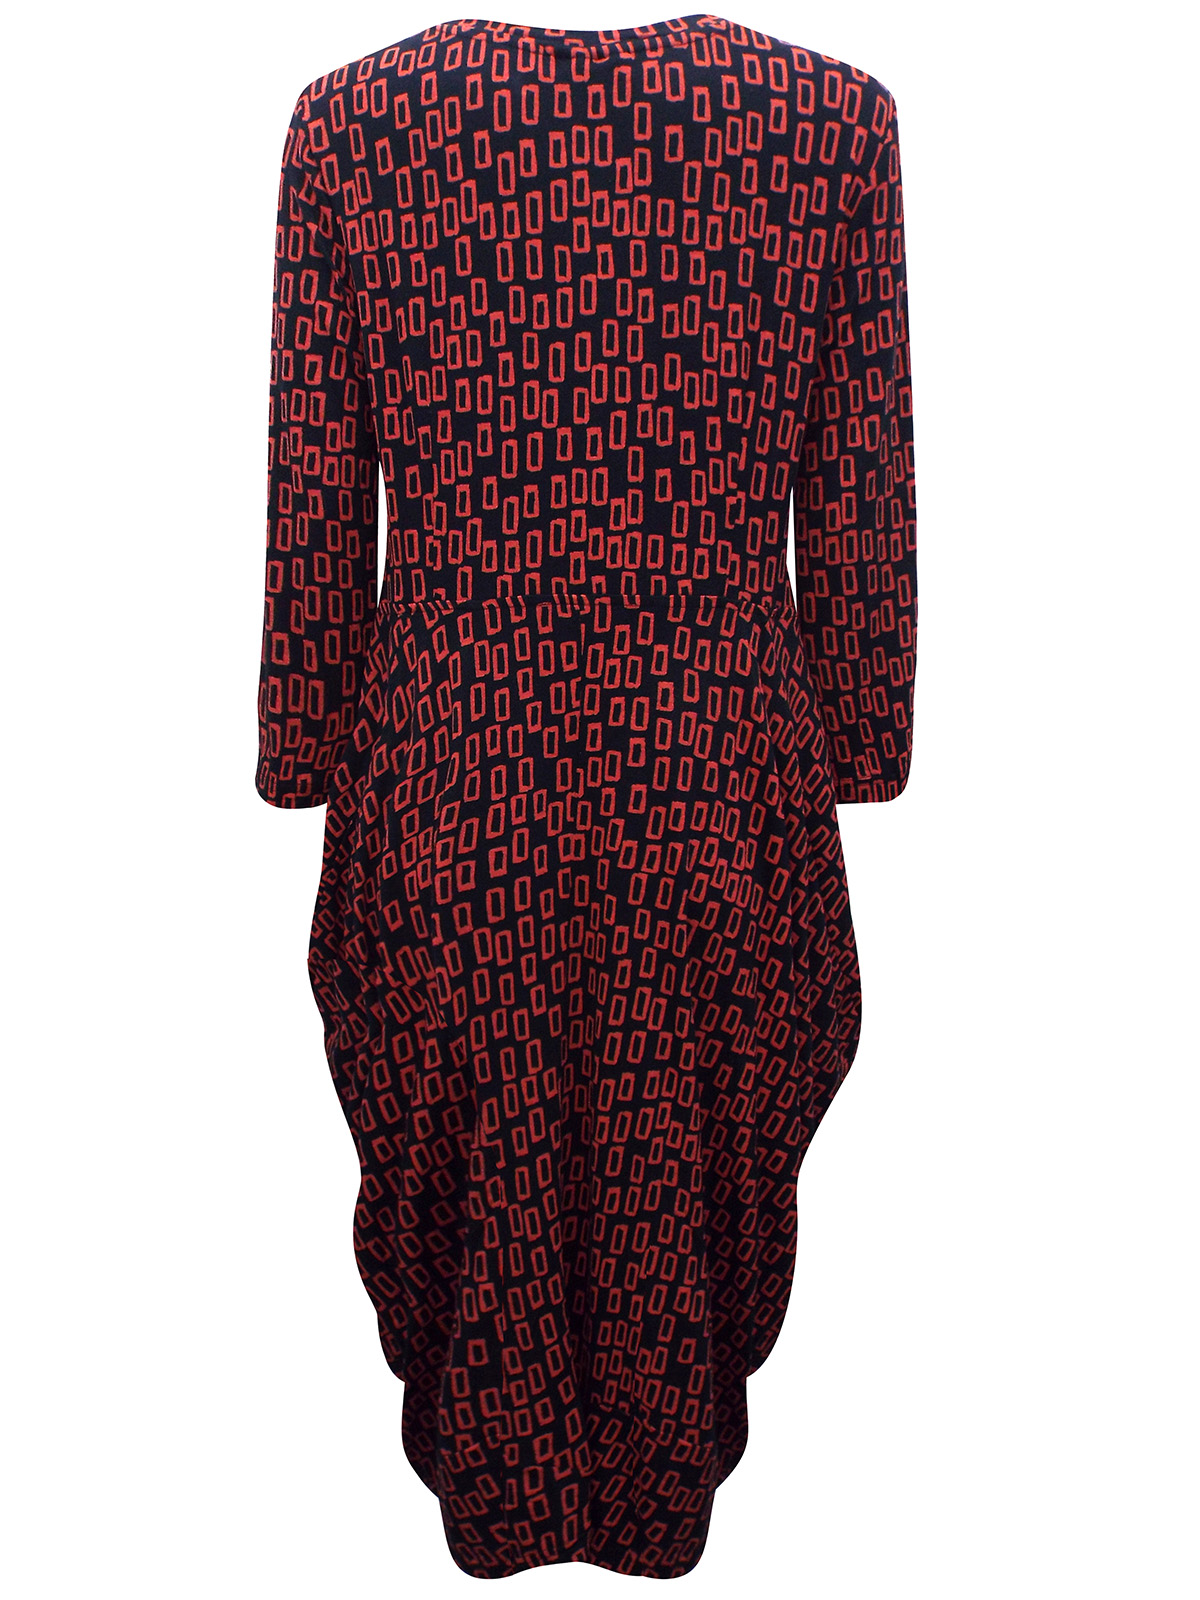 Capri - - Capri BLACK Printed Side Pocket Dress - Size 12/14 to 14/16 ...